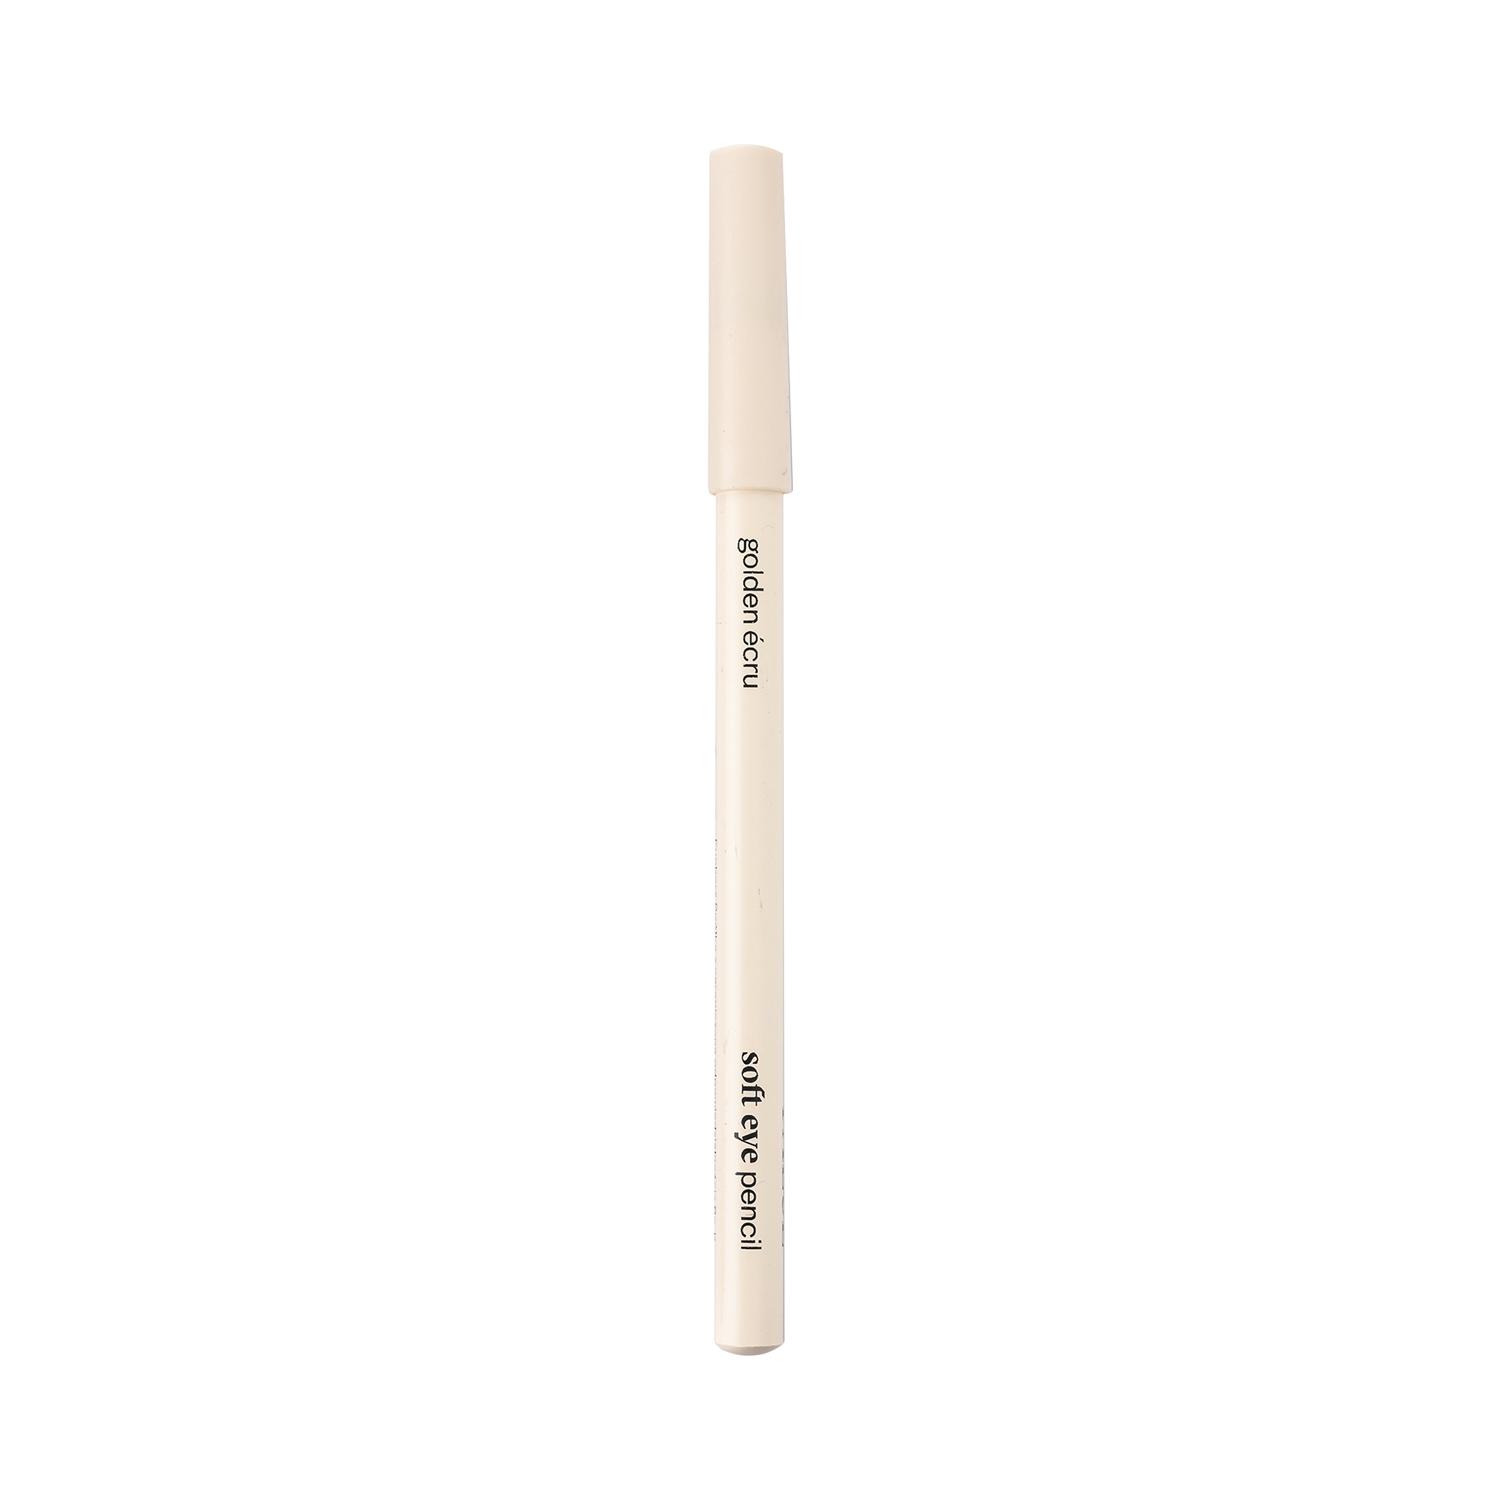 paese cosmetics soft eye pencil - 06 golden ecru (1.5g)